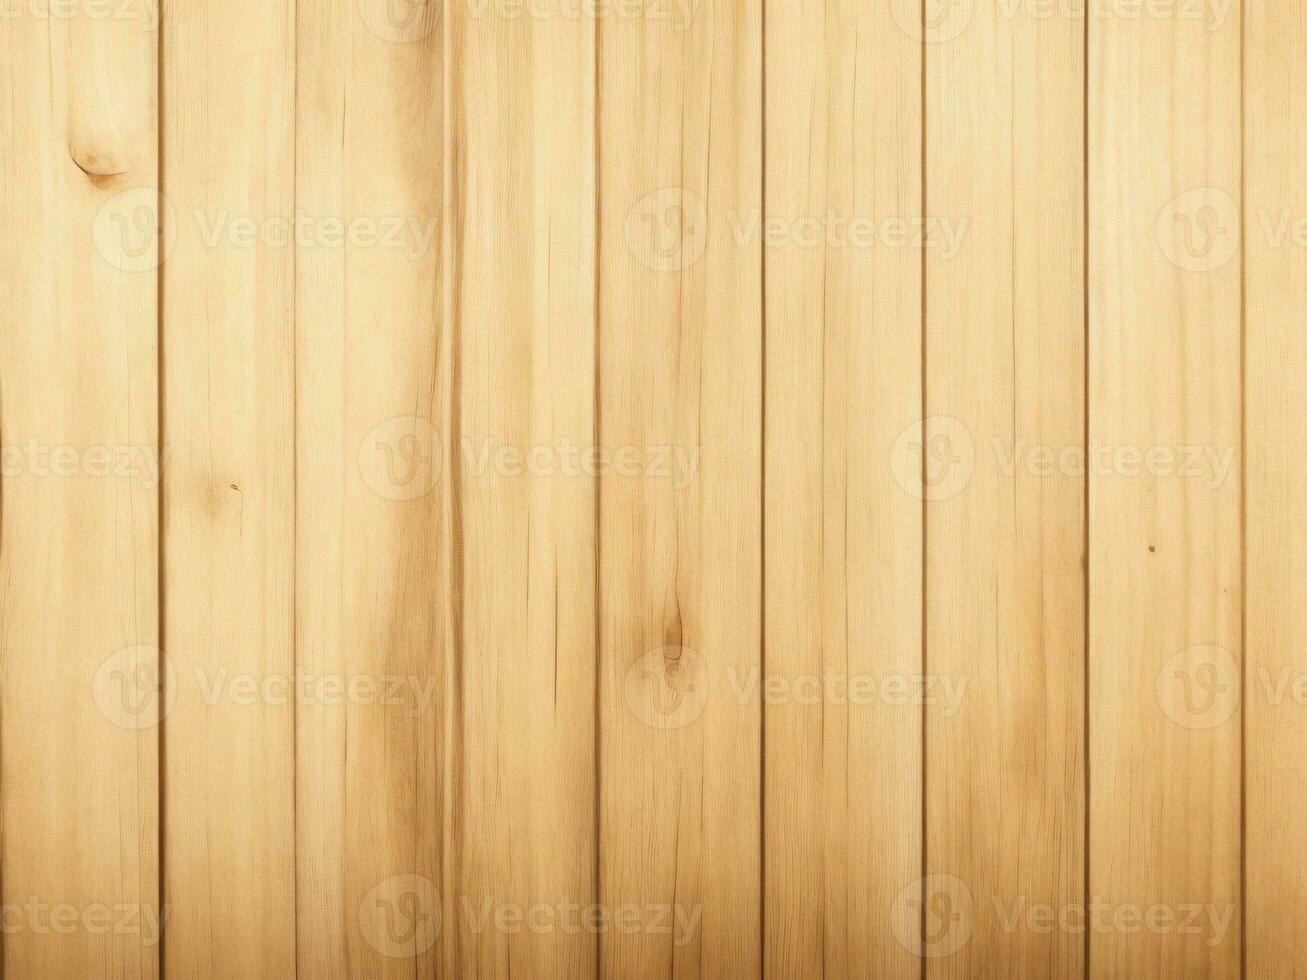 Light wooden panels, yellow wooden hardboard photo